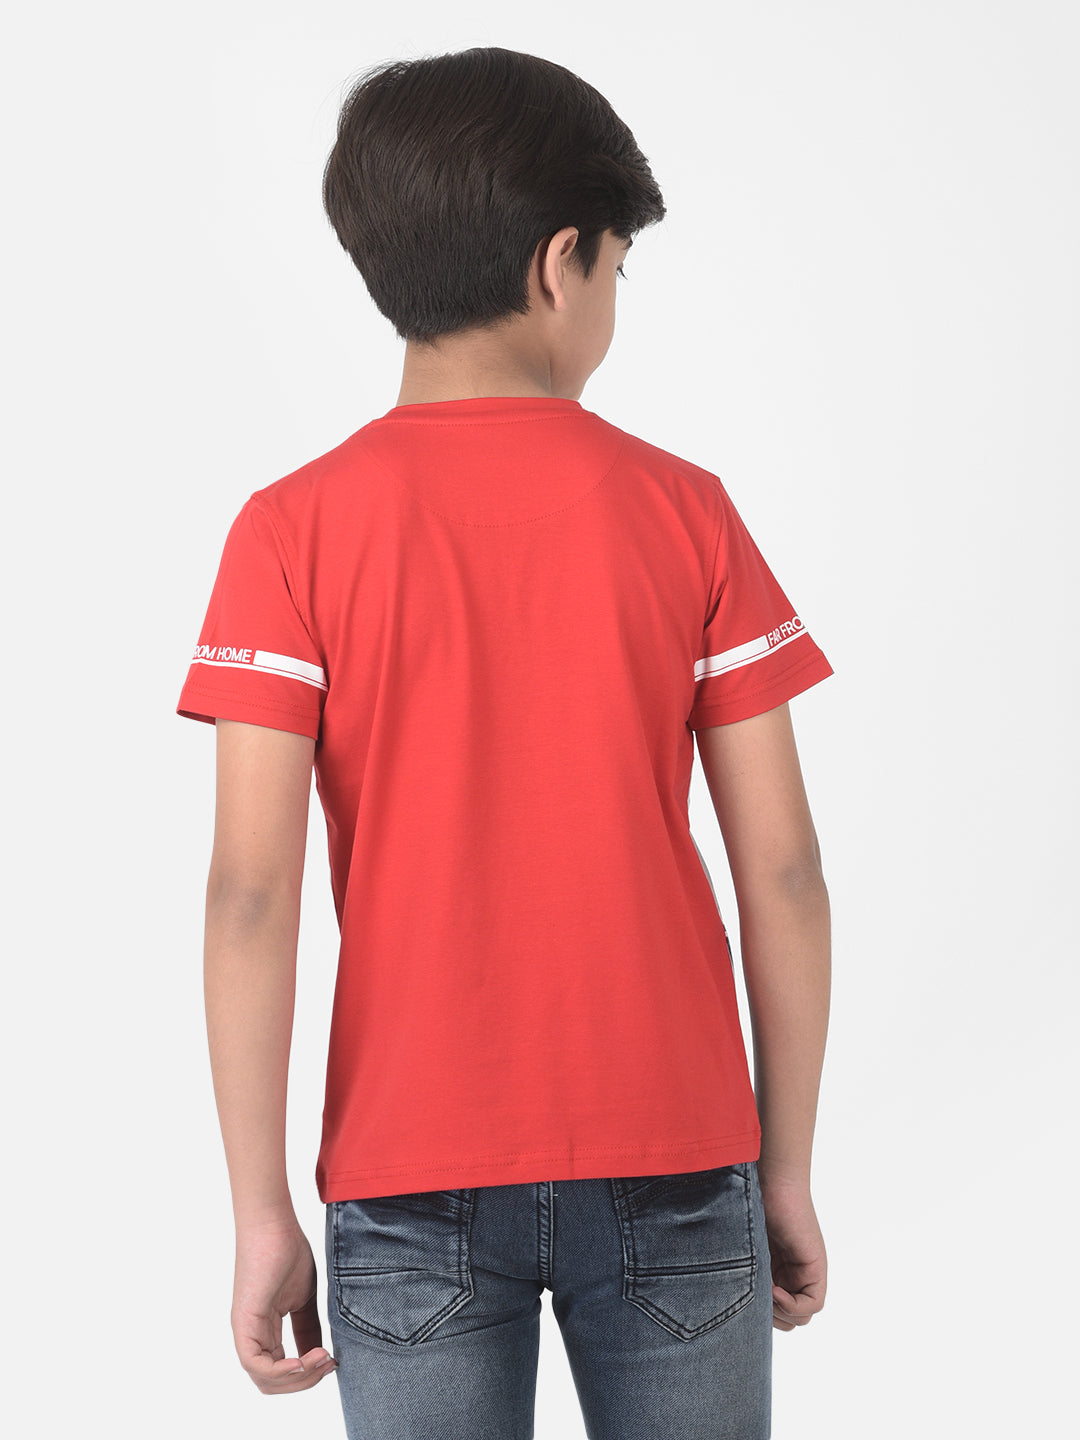 Red Printed Round Neck T-shirt - Boys T-Shirts